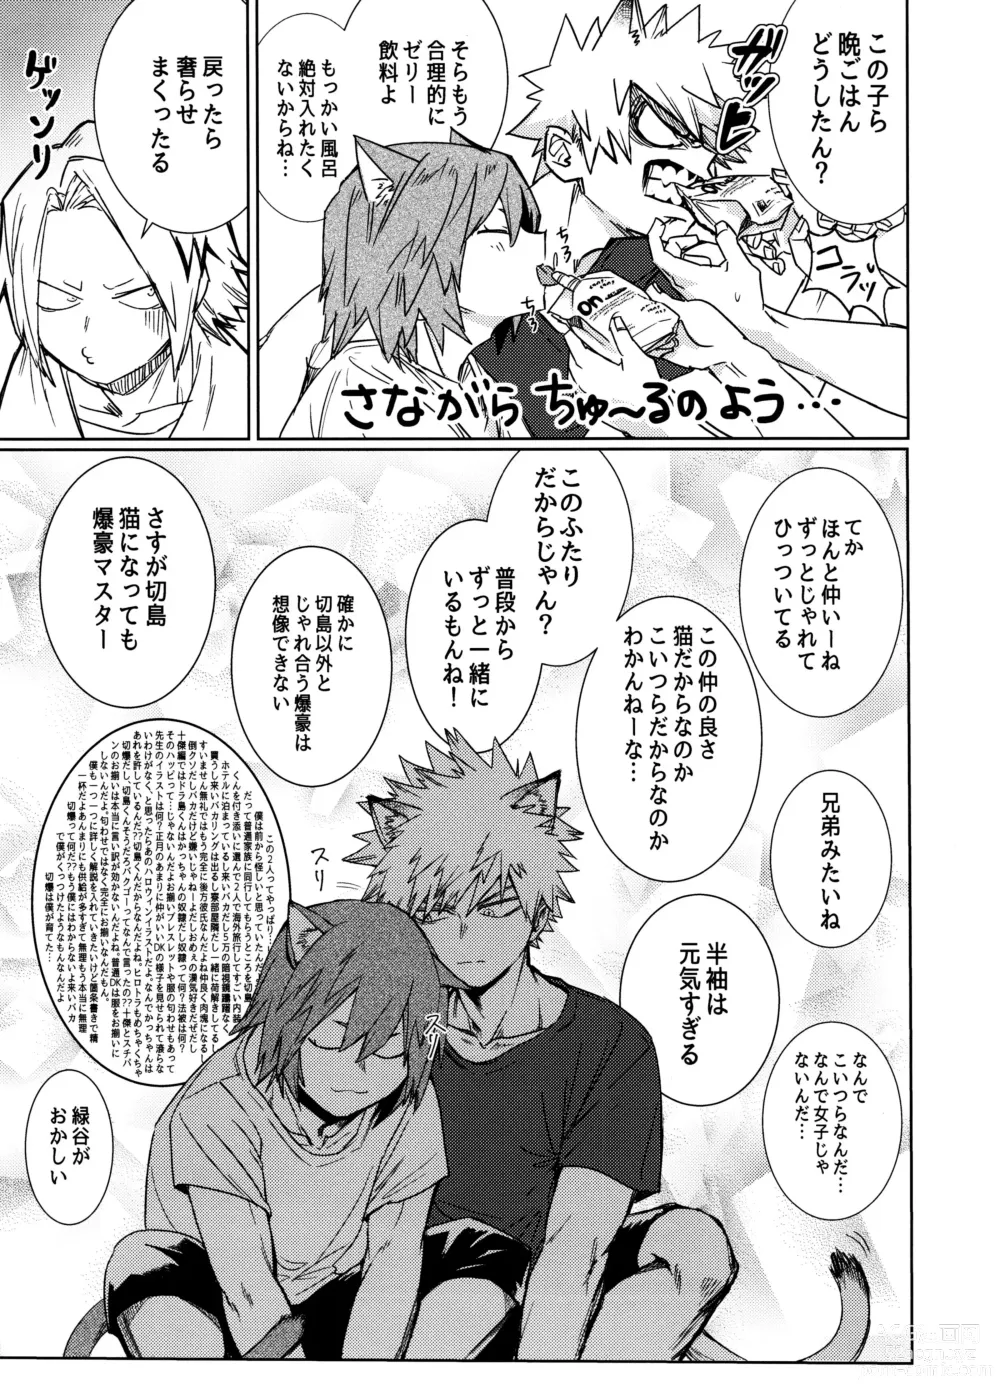 Page 9 of doujinshi Nekojiko Trigger